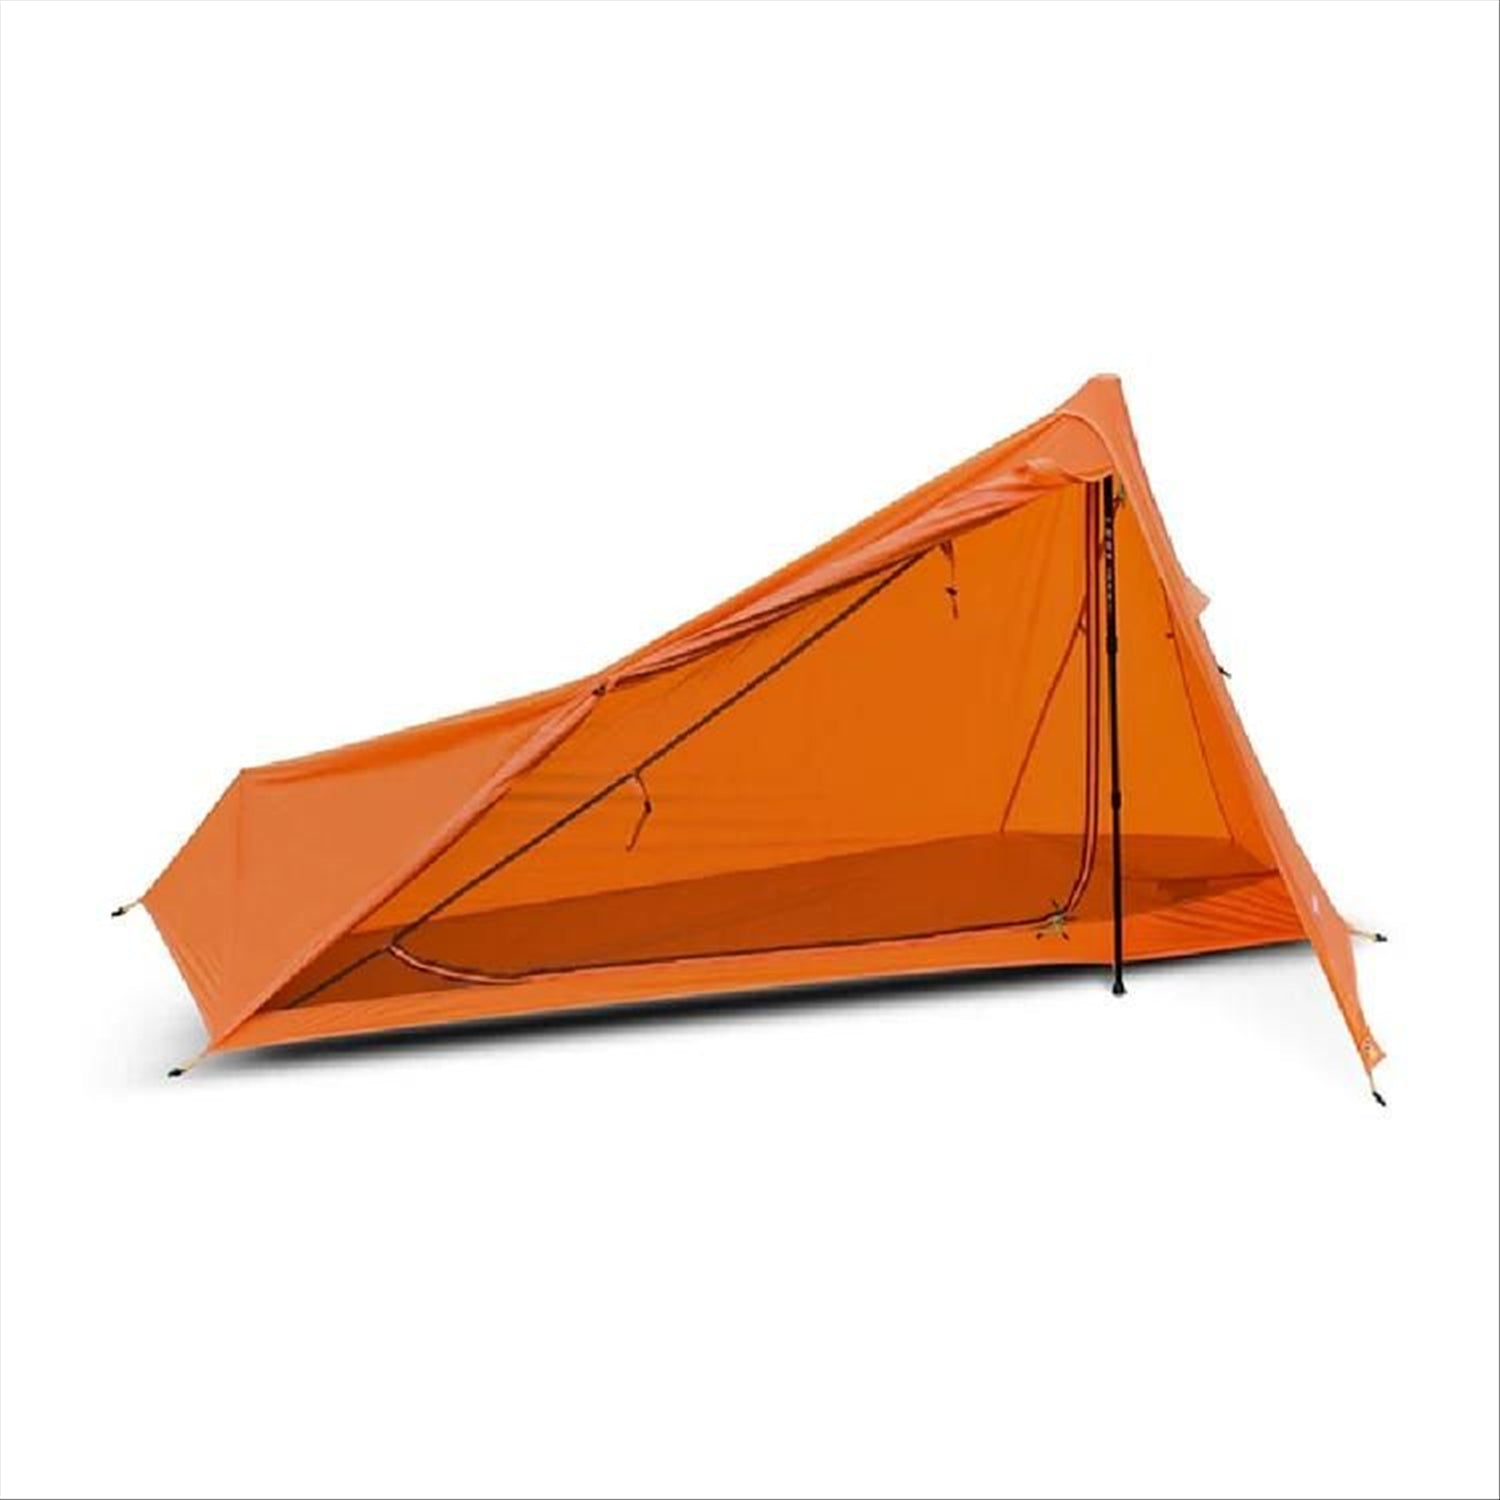 Ultrapack SW - Ultralight Nylon 1 Person Hiking Tent, Single Wall, 710g